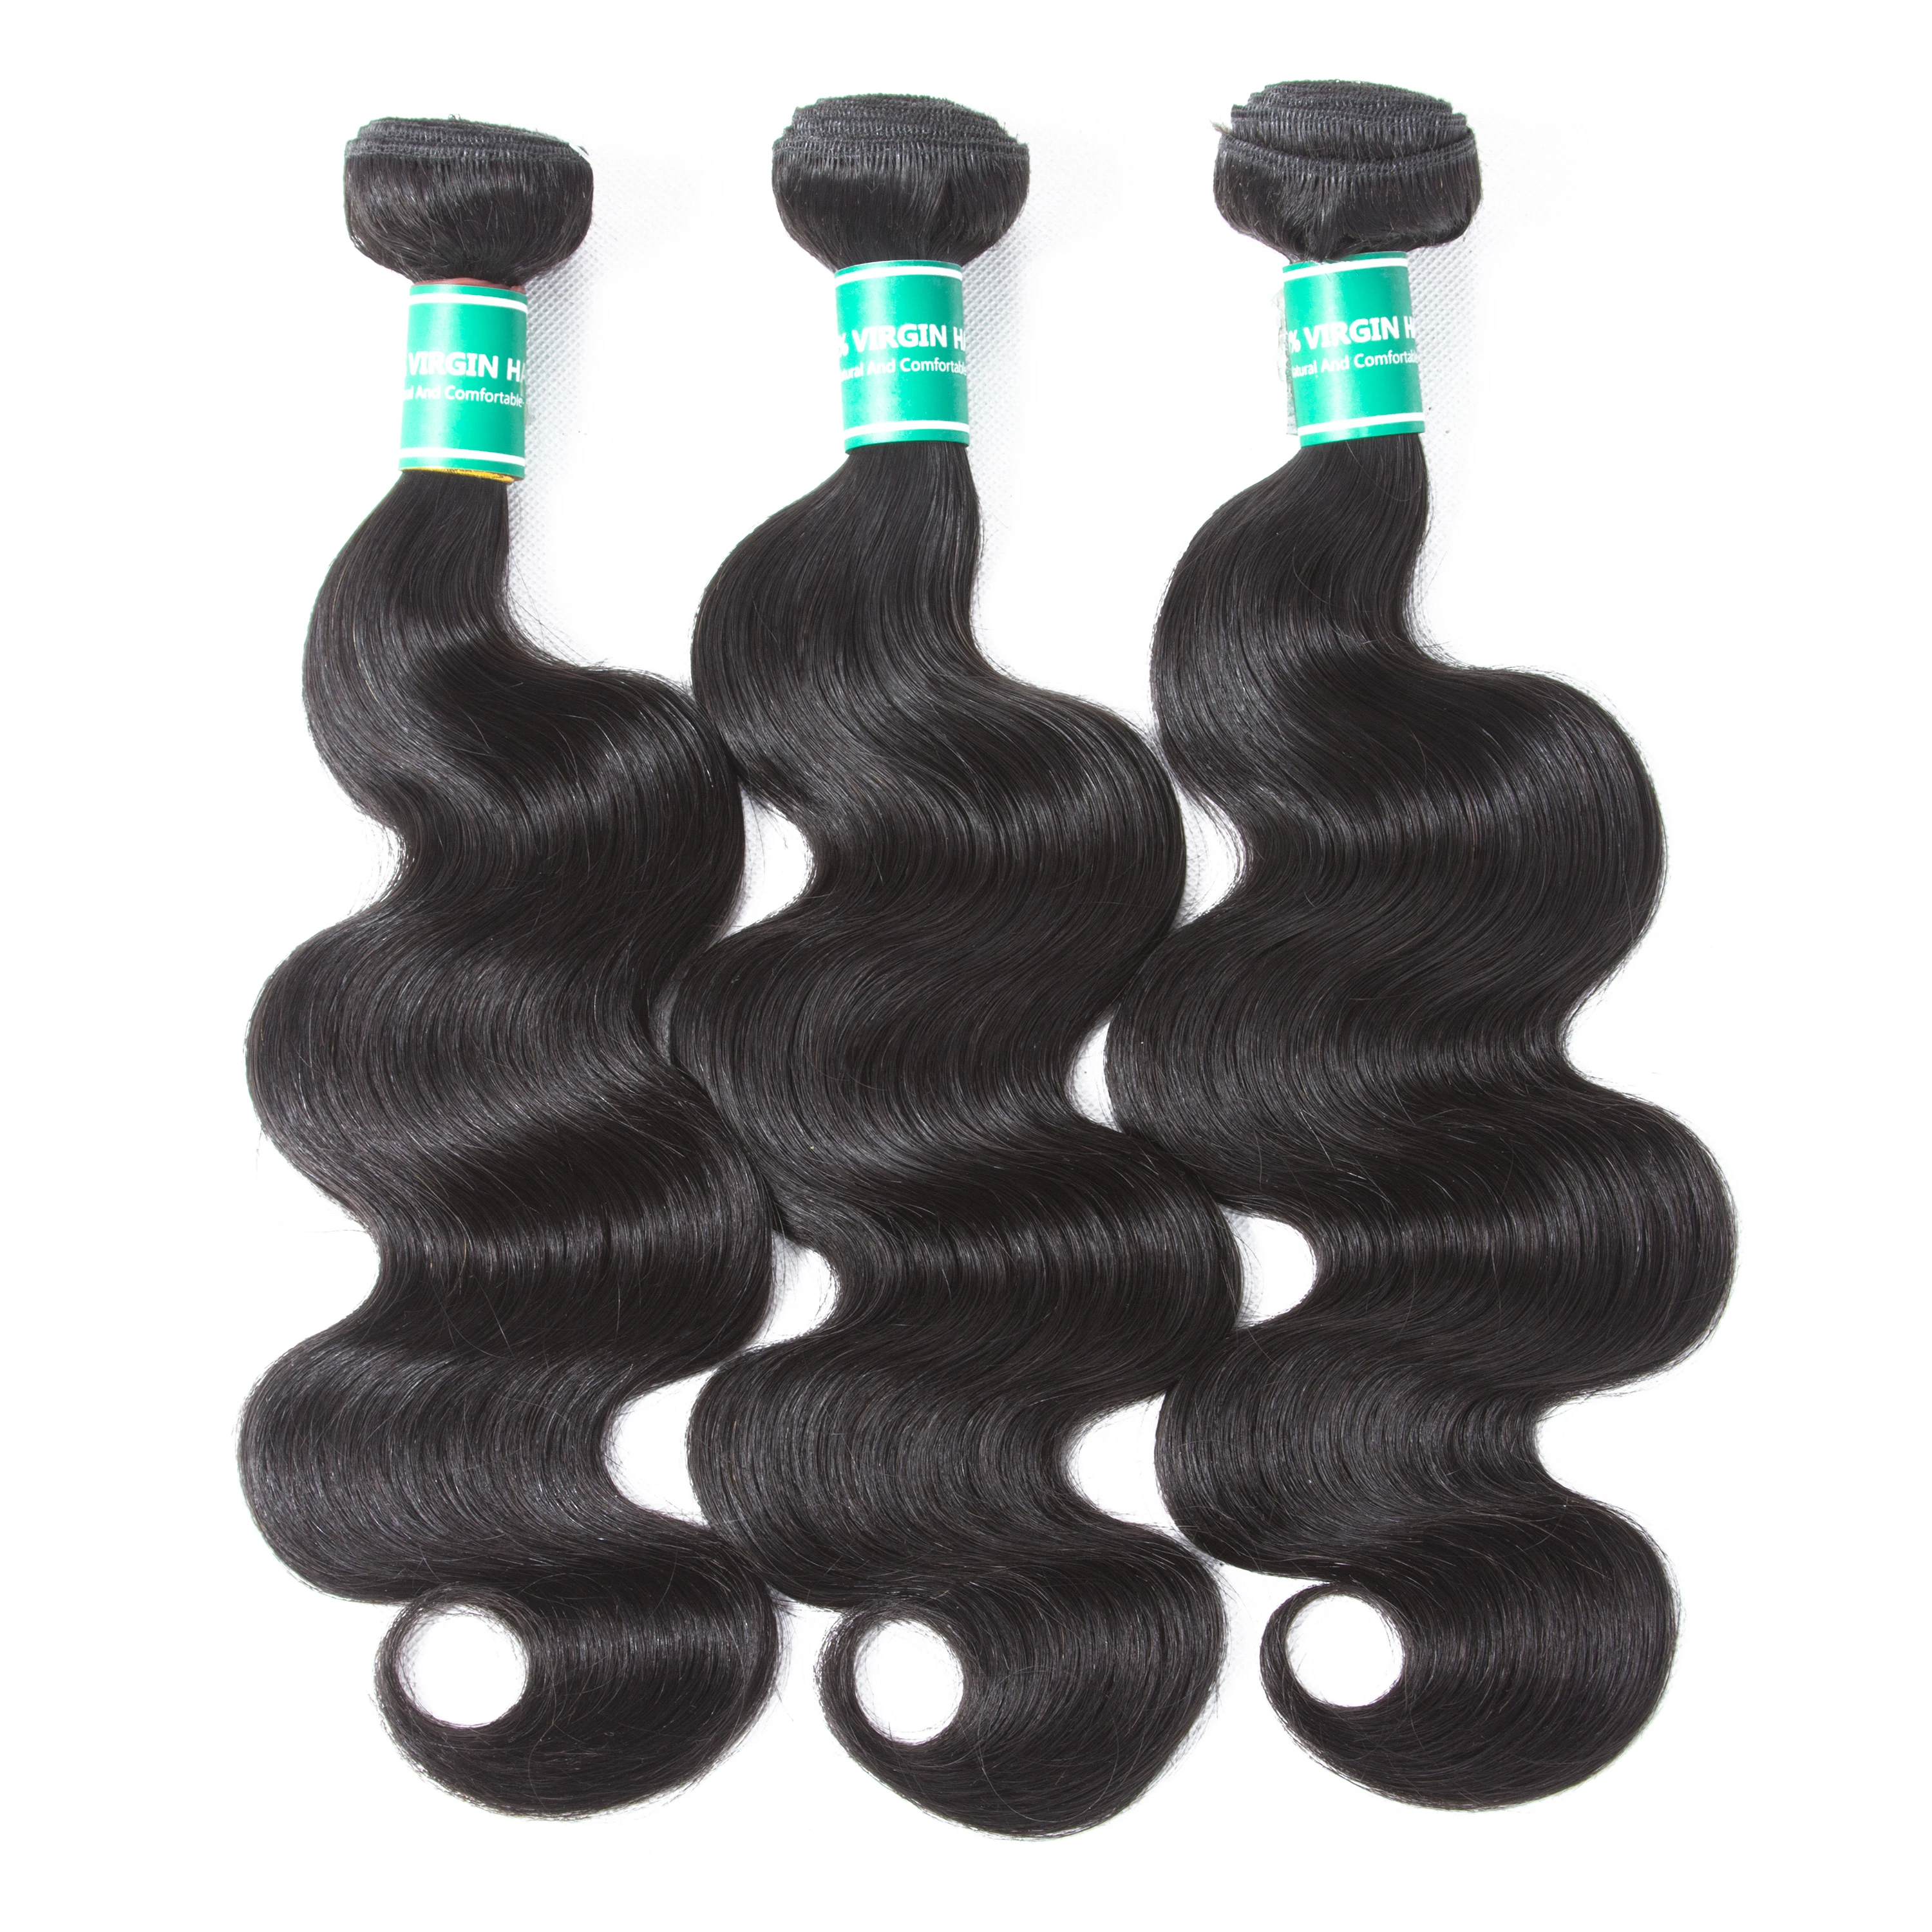 

Eli Hair Supplier wholesale 100% Raw Virgin Indian Human Hair Weave Bundles, wigs human hair vendors, Natural color